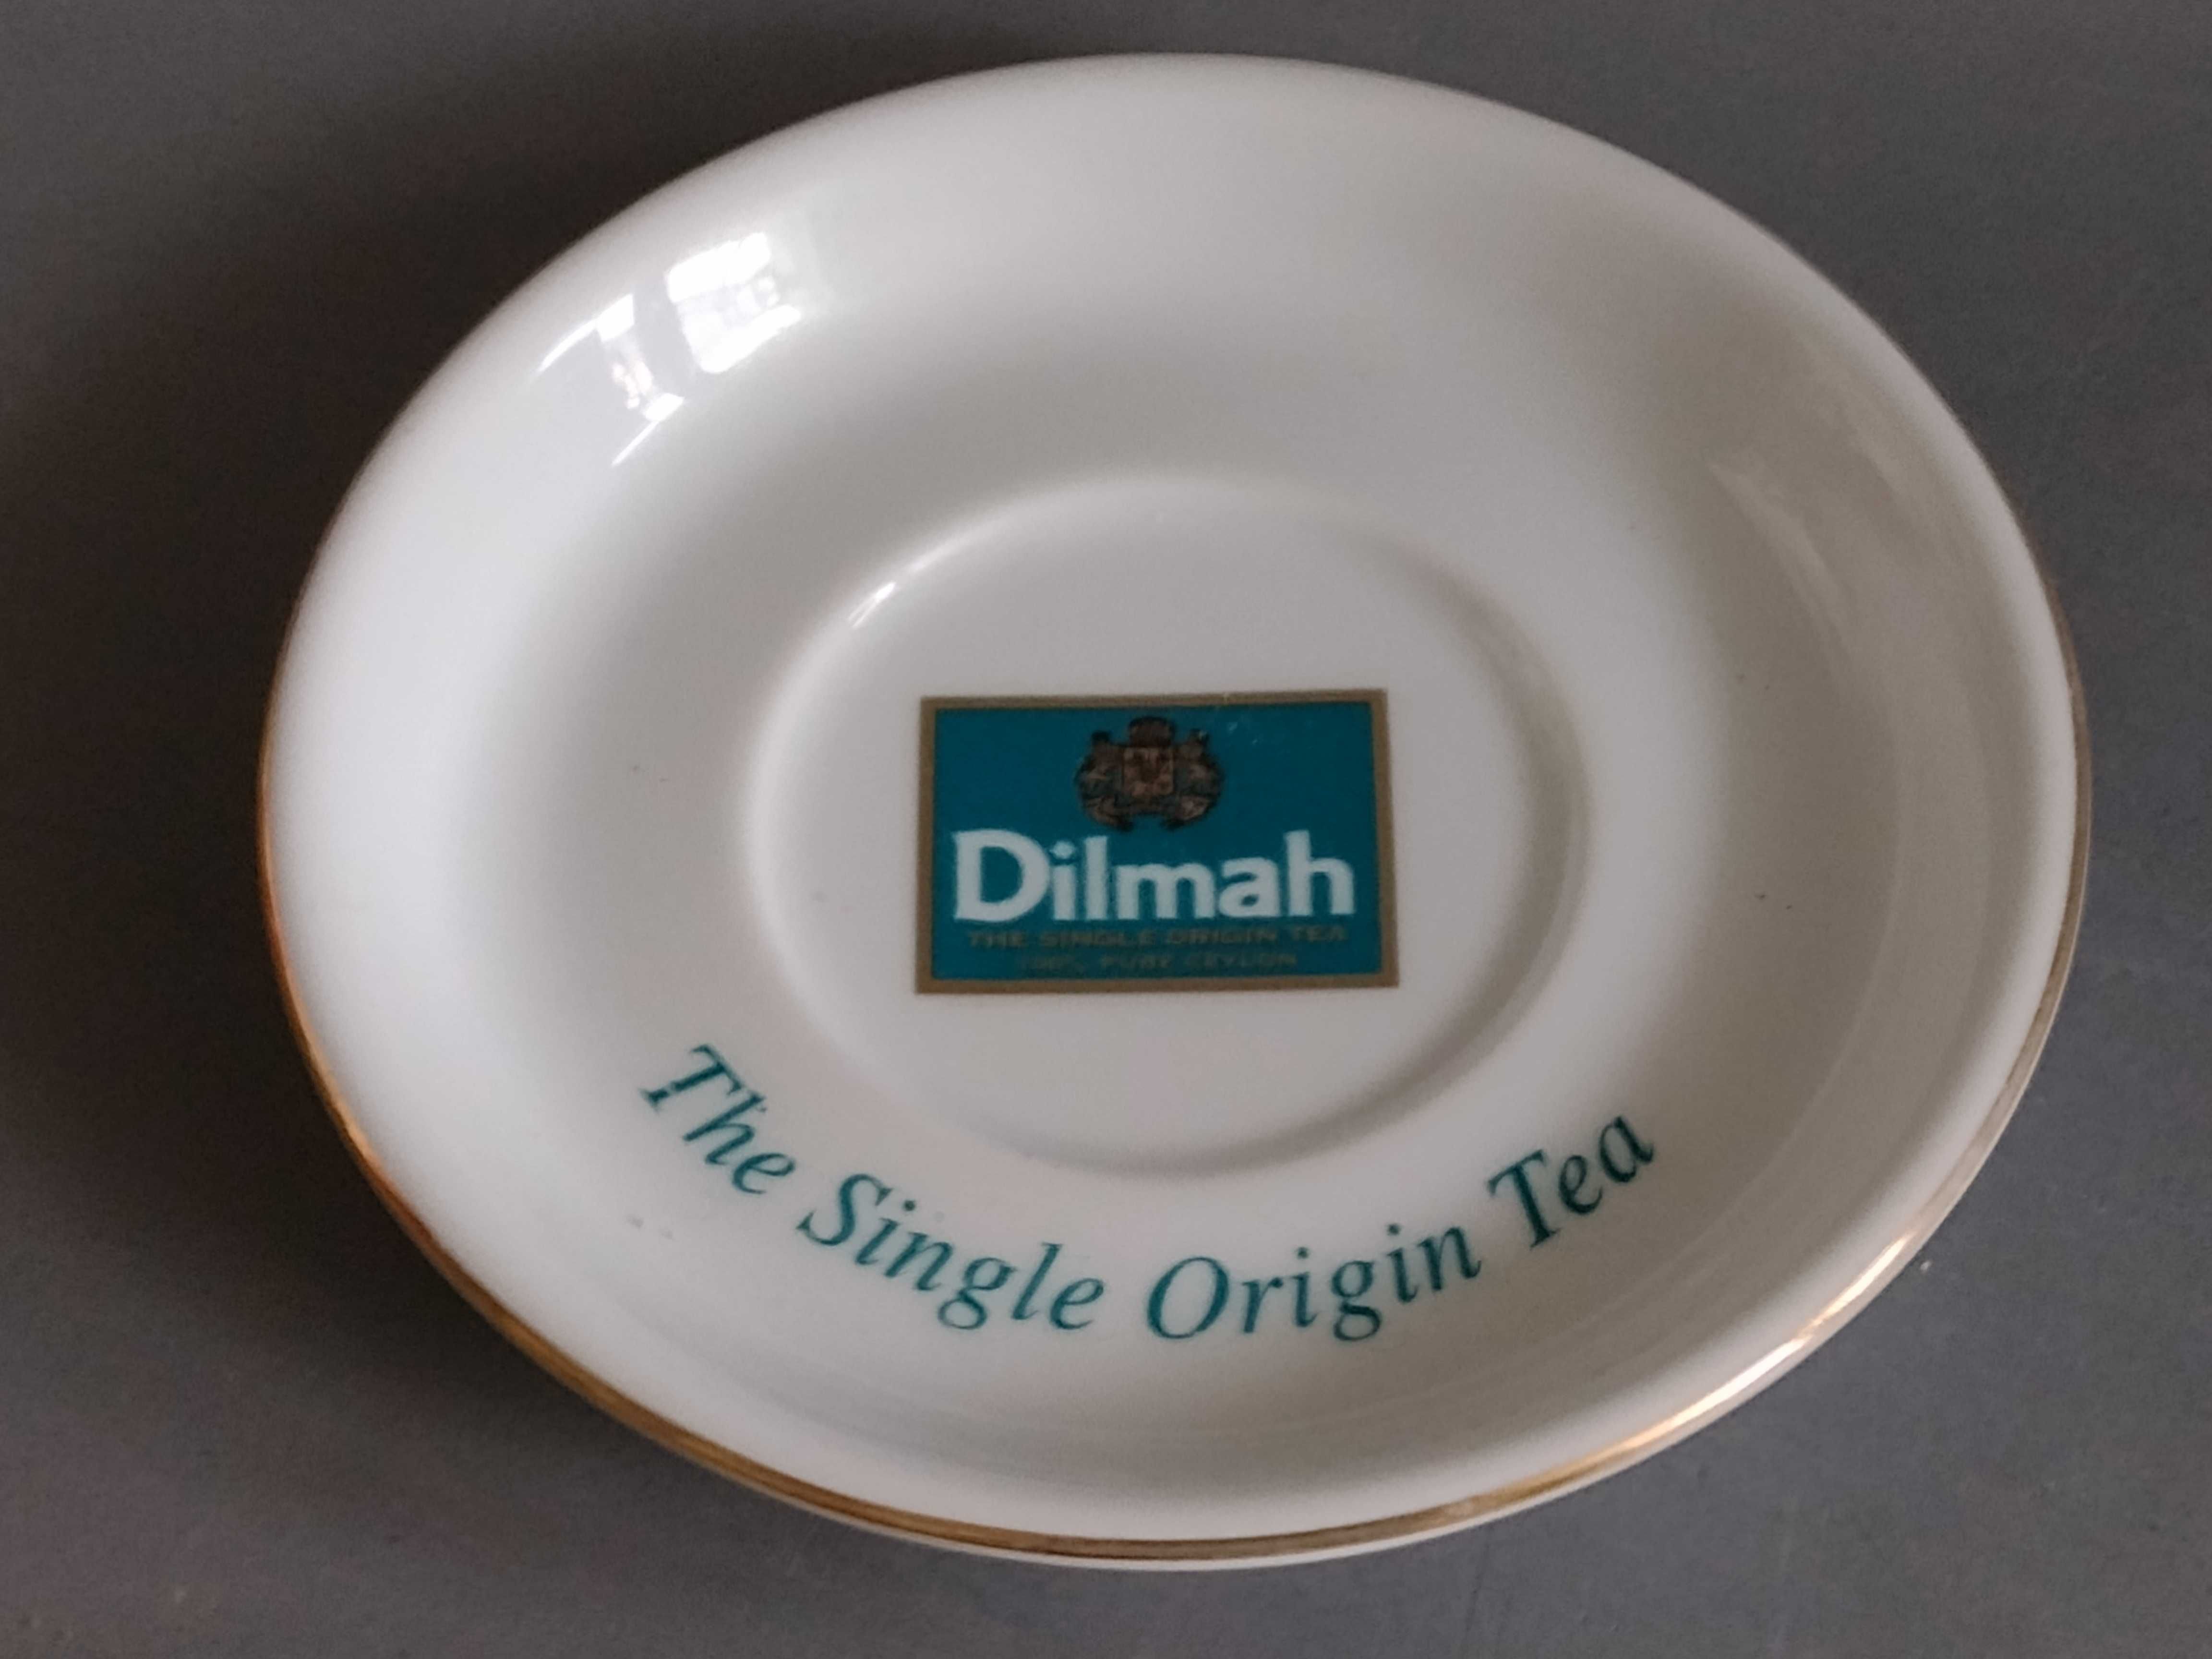 Dilmah - Spodek pod filiżankę